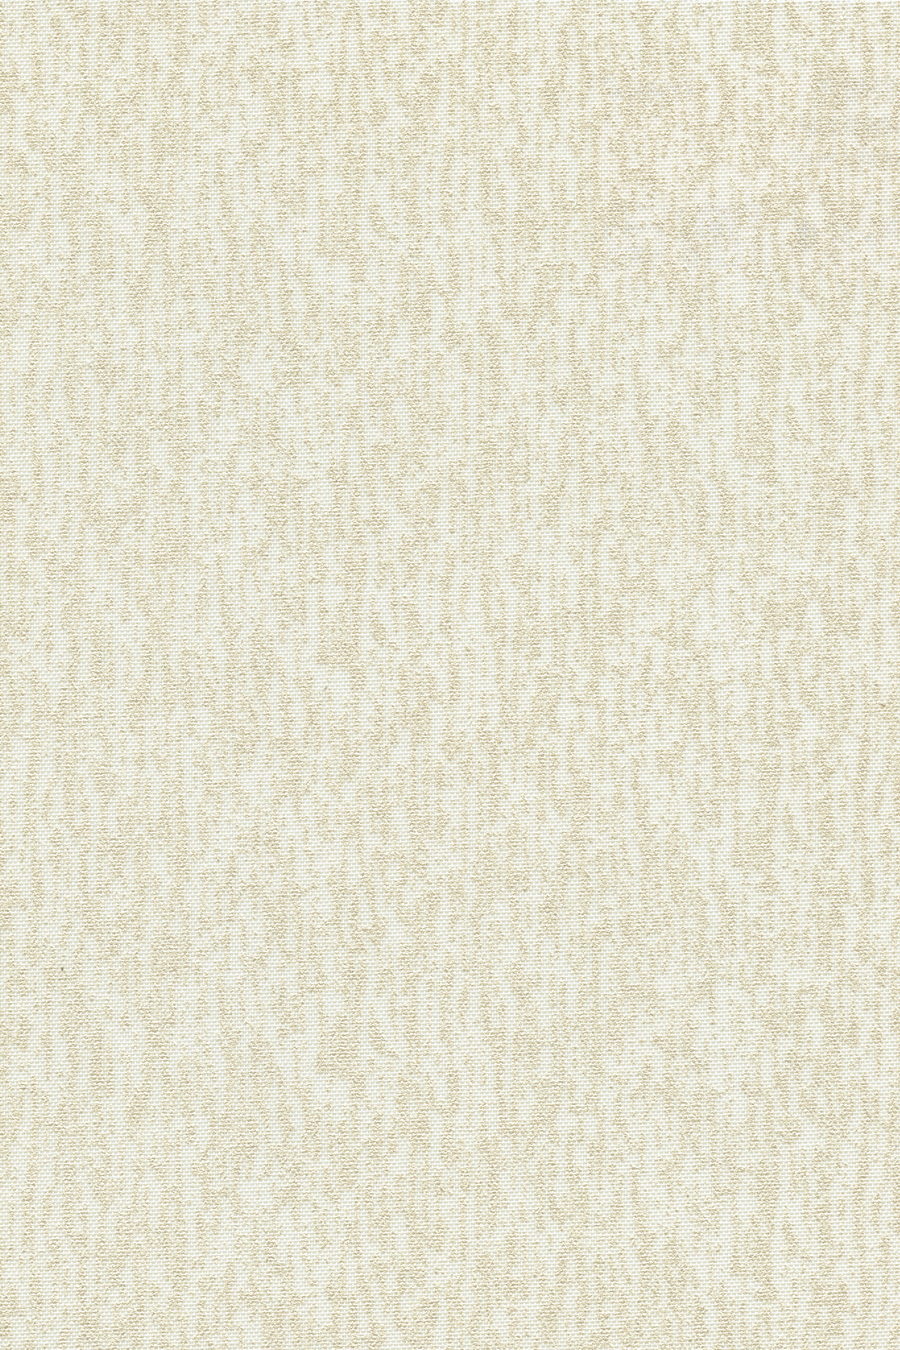 Ткань SHINE МОЛОЧНЫЙ 205217-0002 для рольштор